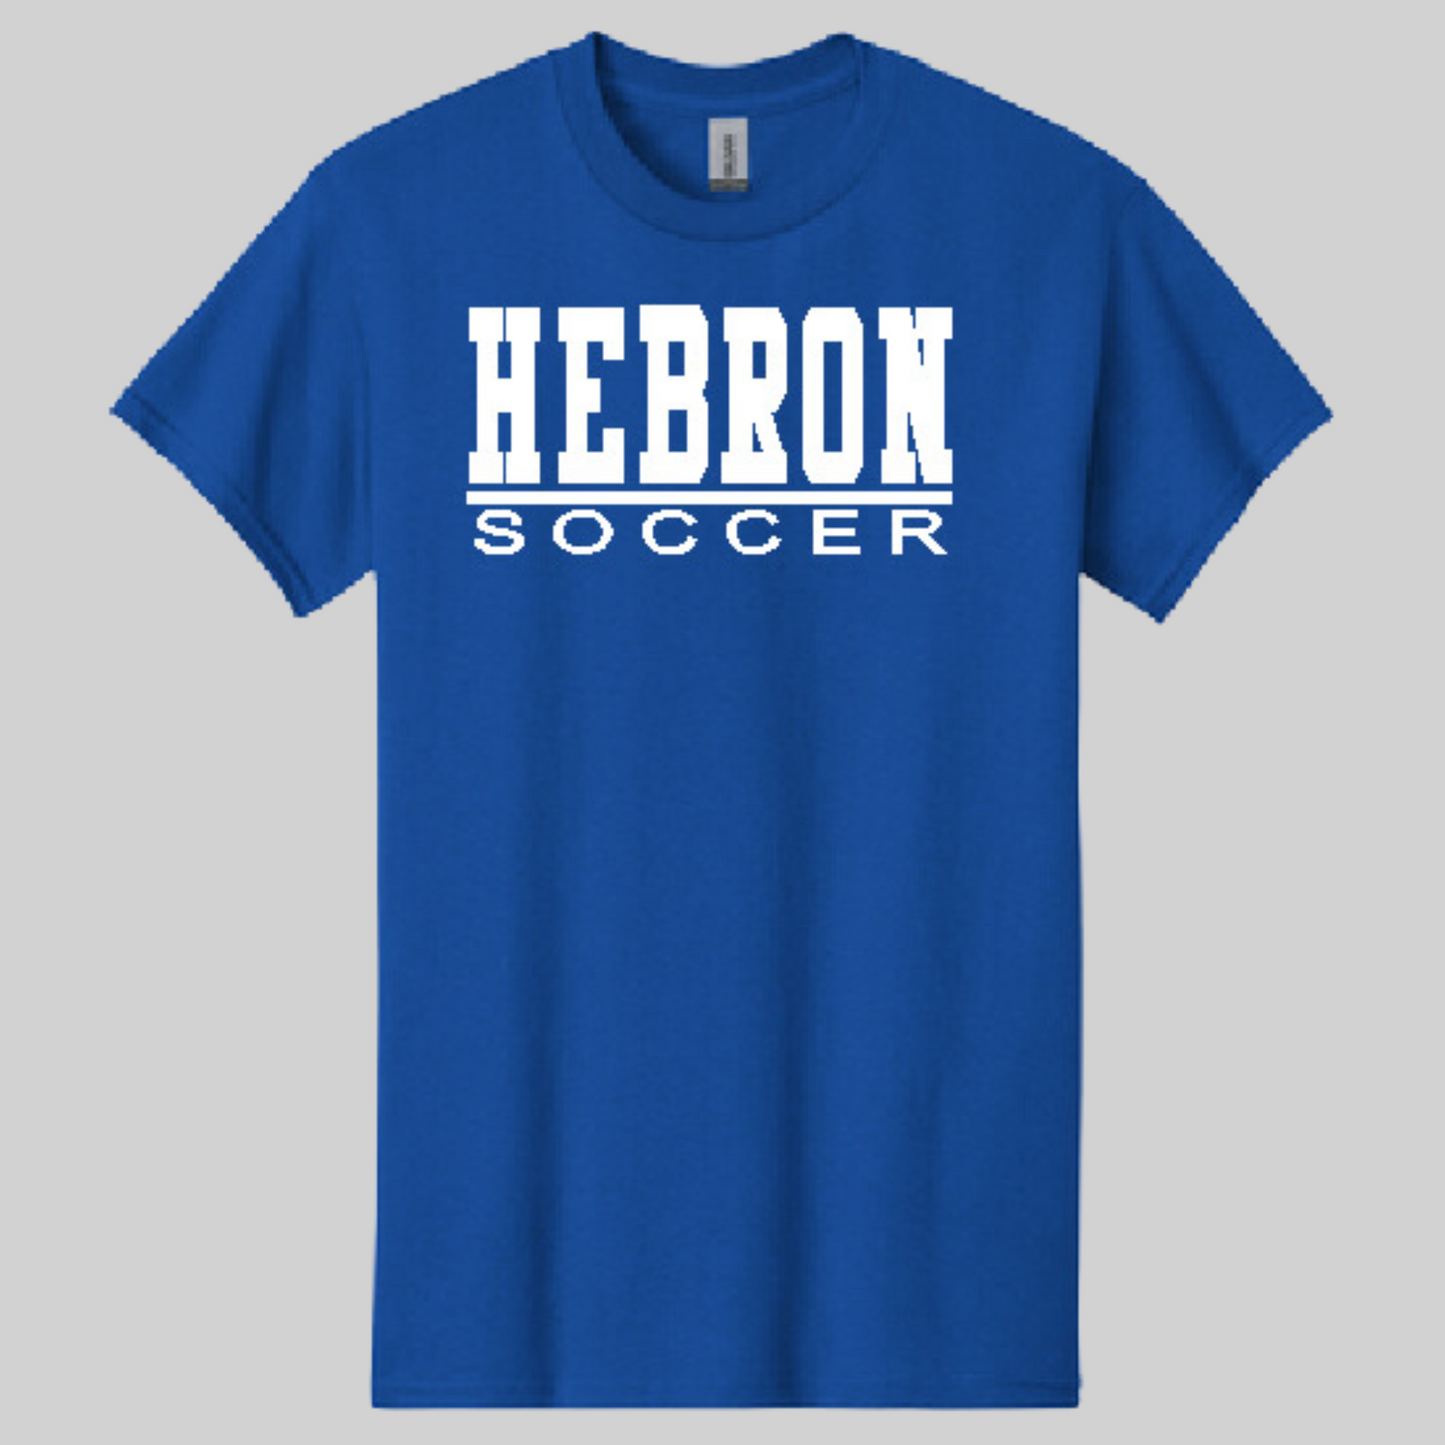 Hebron High School Soccer 23-4